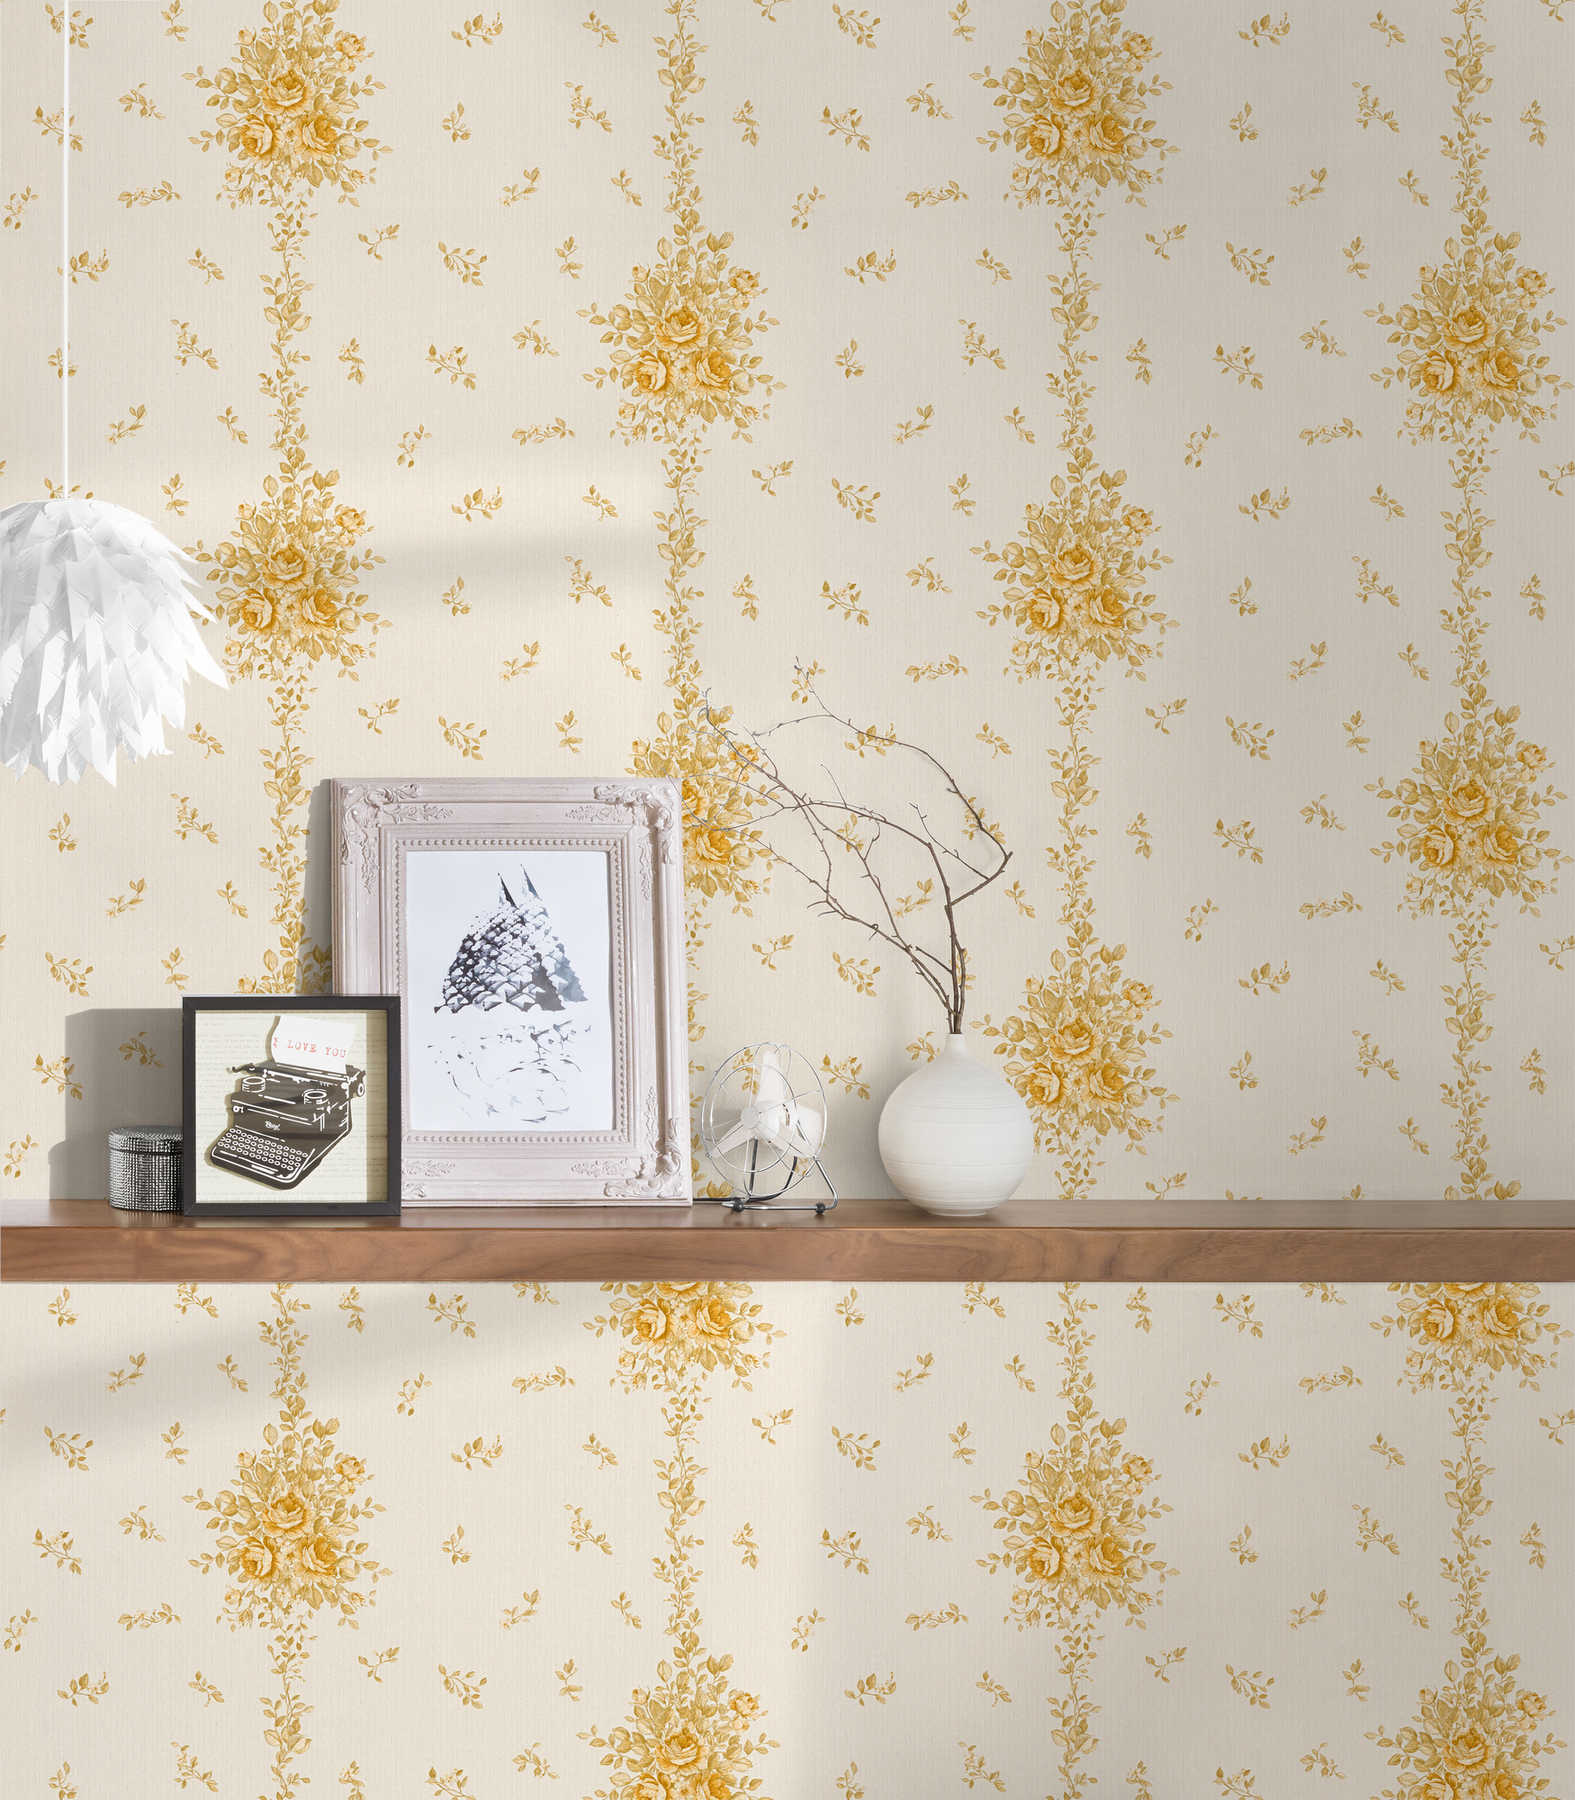             Bloemenbehang bloemenpatroon in metallic goud - crème
        